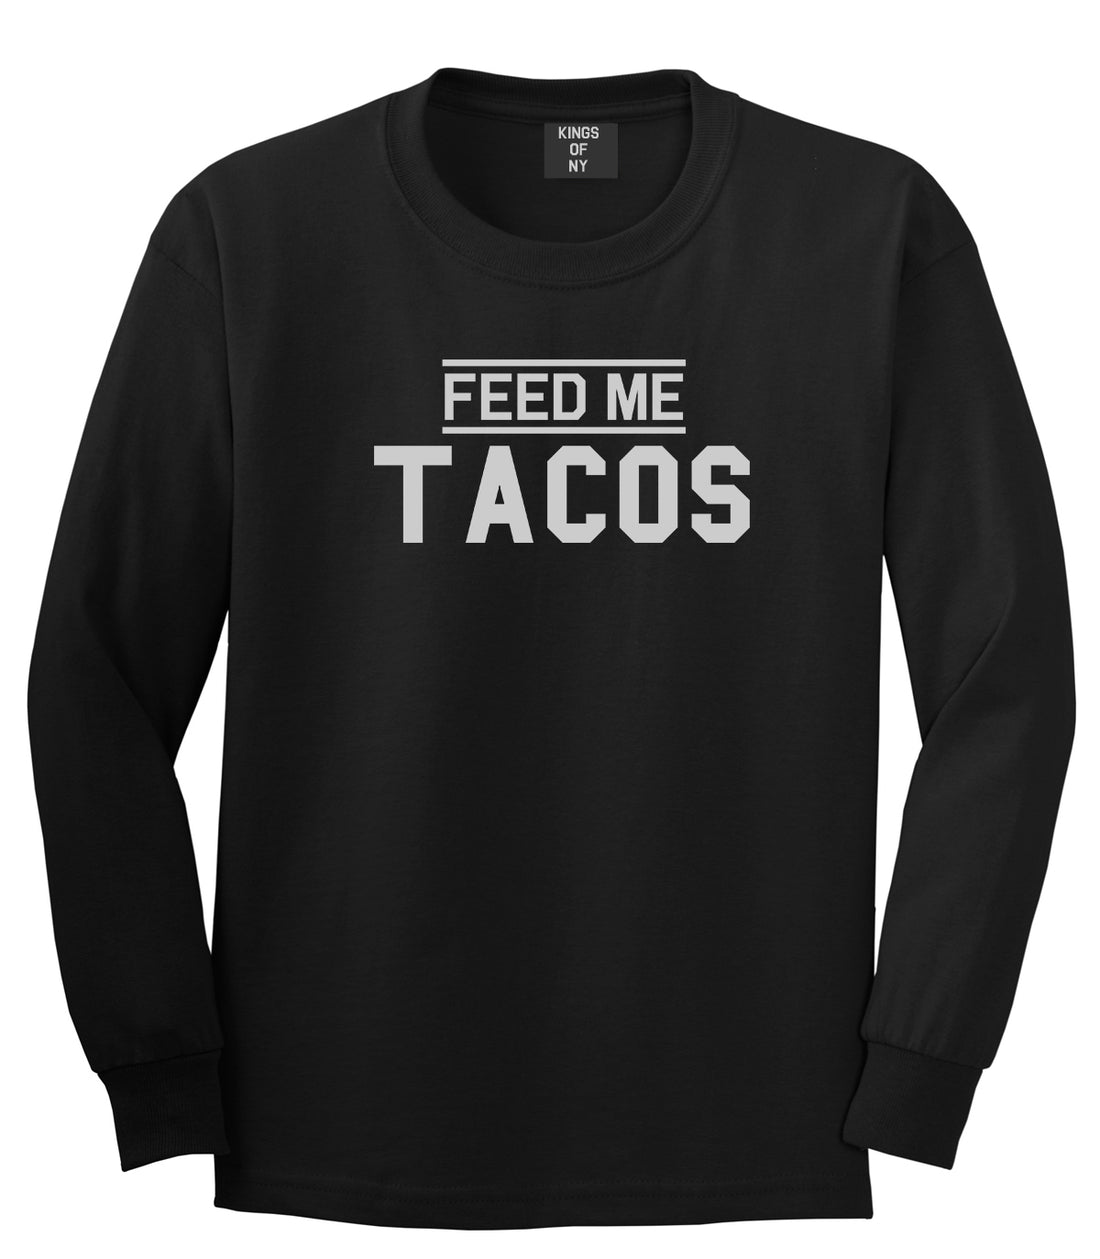 Feed Me Tacos Mens Black Long Sleeve T-Shirt by KINGS OF NY